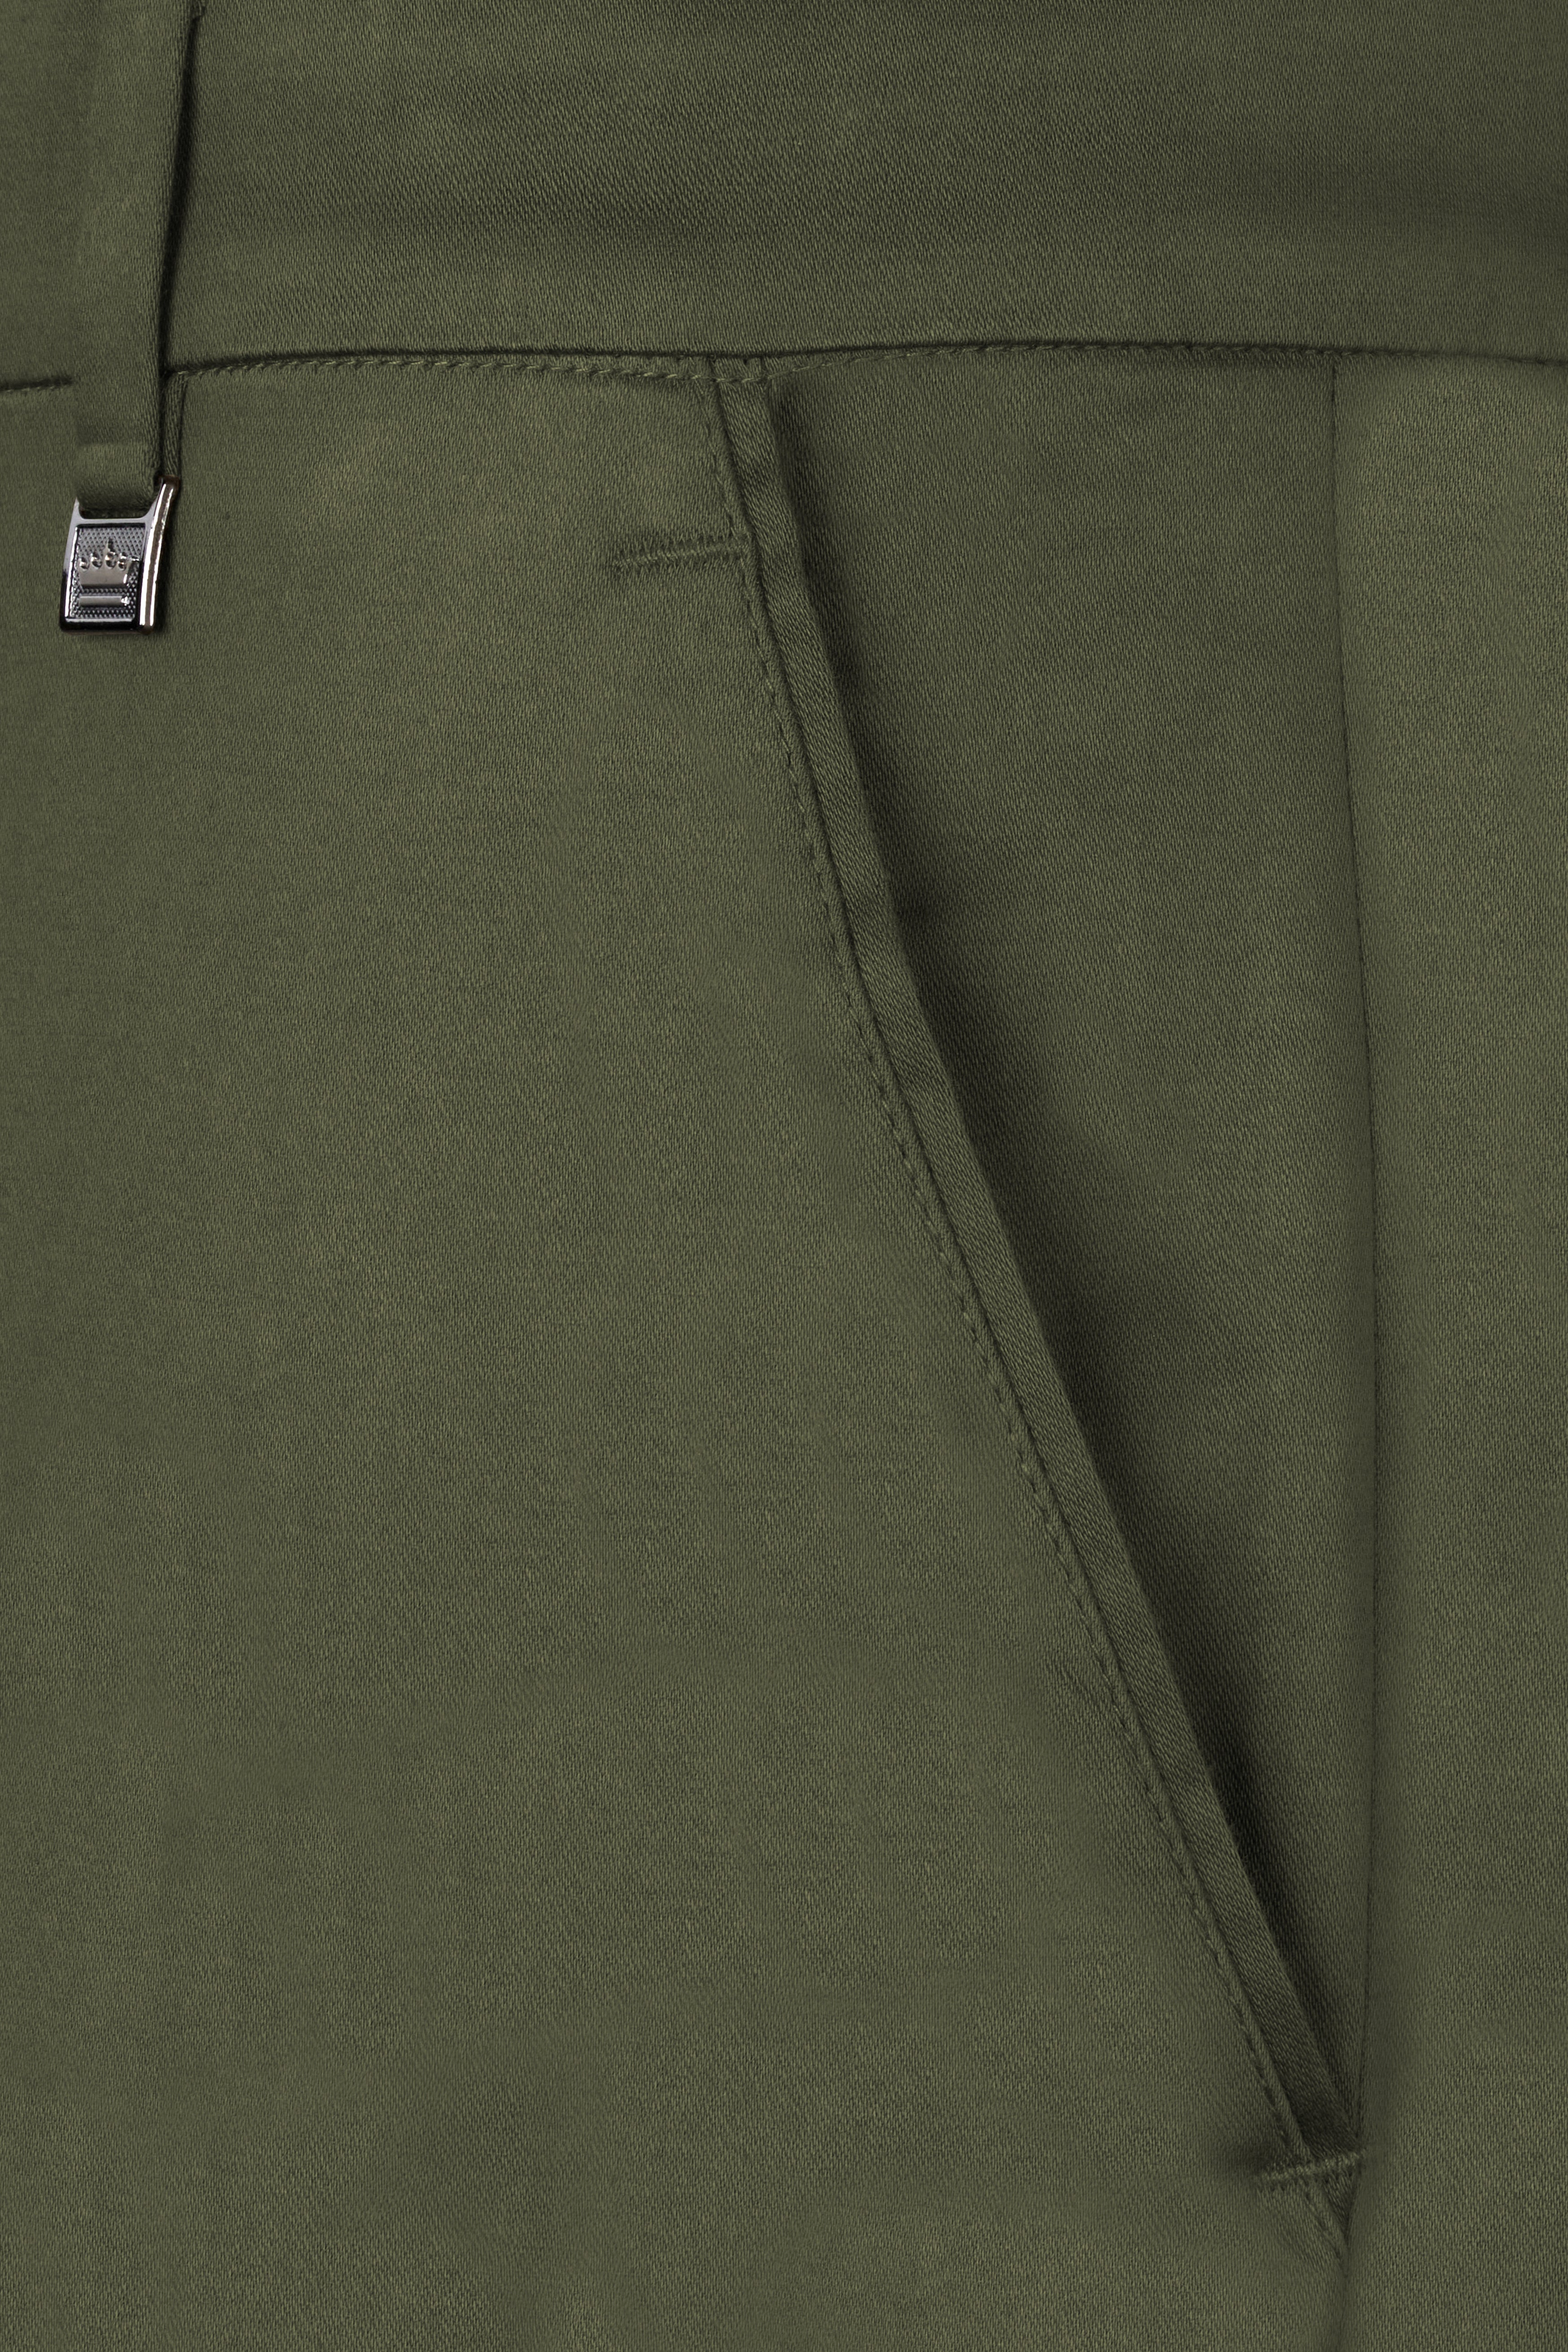 Hemlock Green Premium Cotton Stretchable Traveler Pant T2783-28, T2783-30, T2783-32, T2783-34, T2783-36, T2783-38, T2783-40, T2783-42, T2783-44